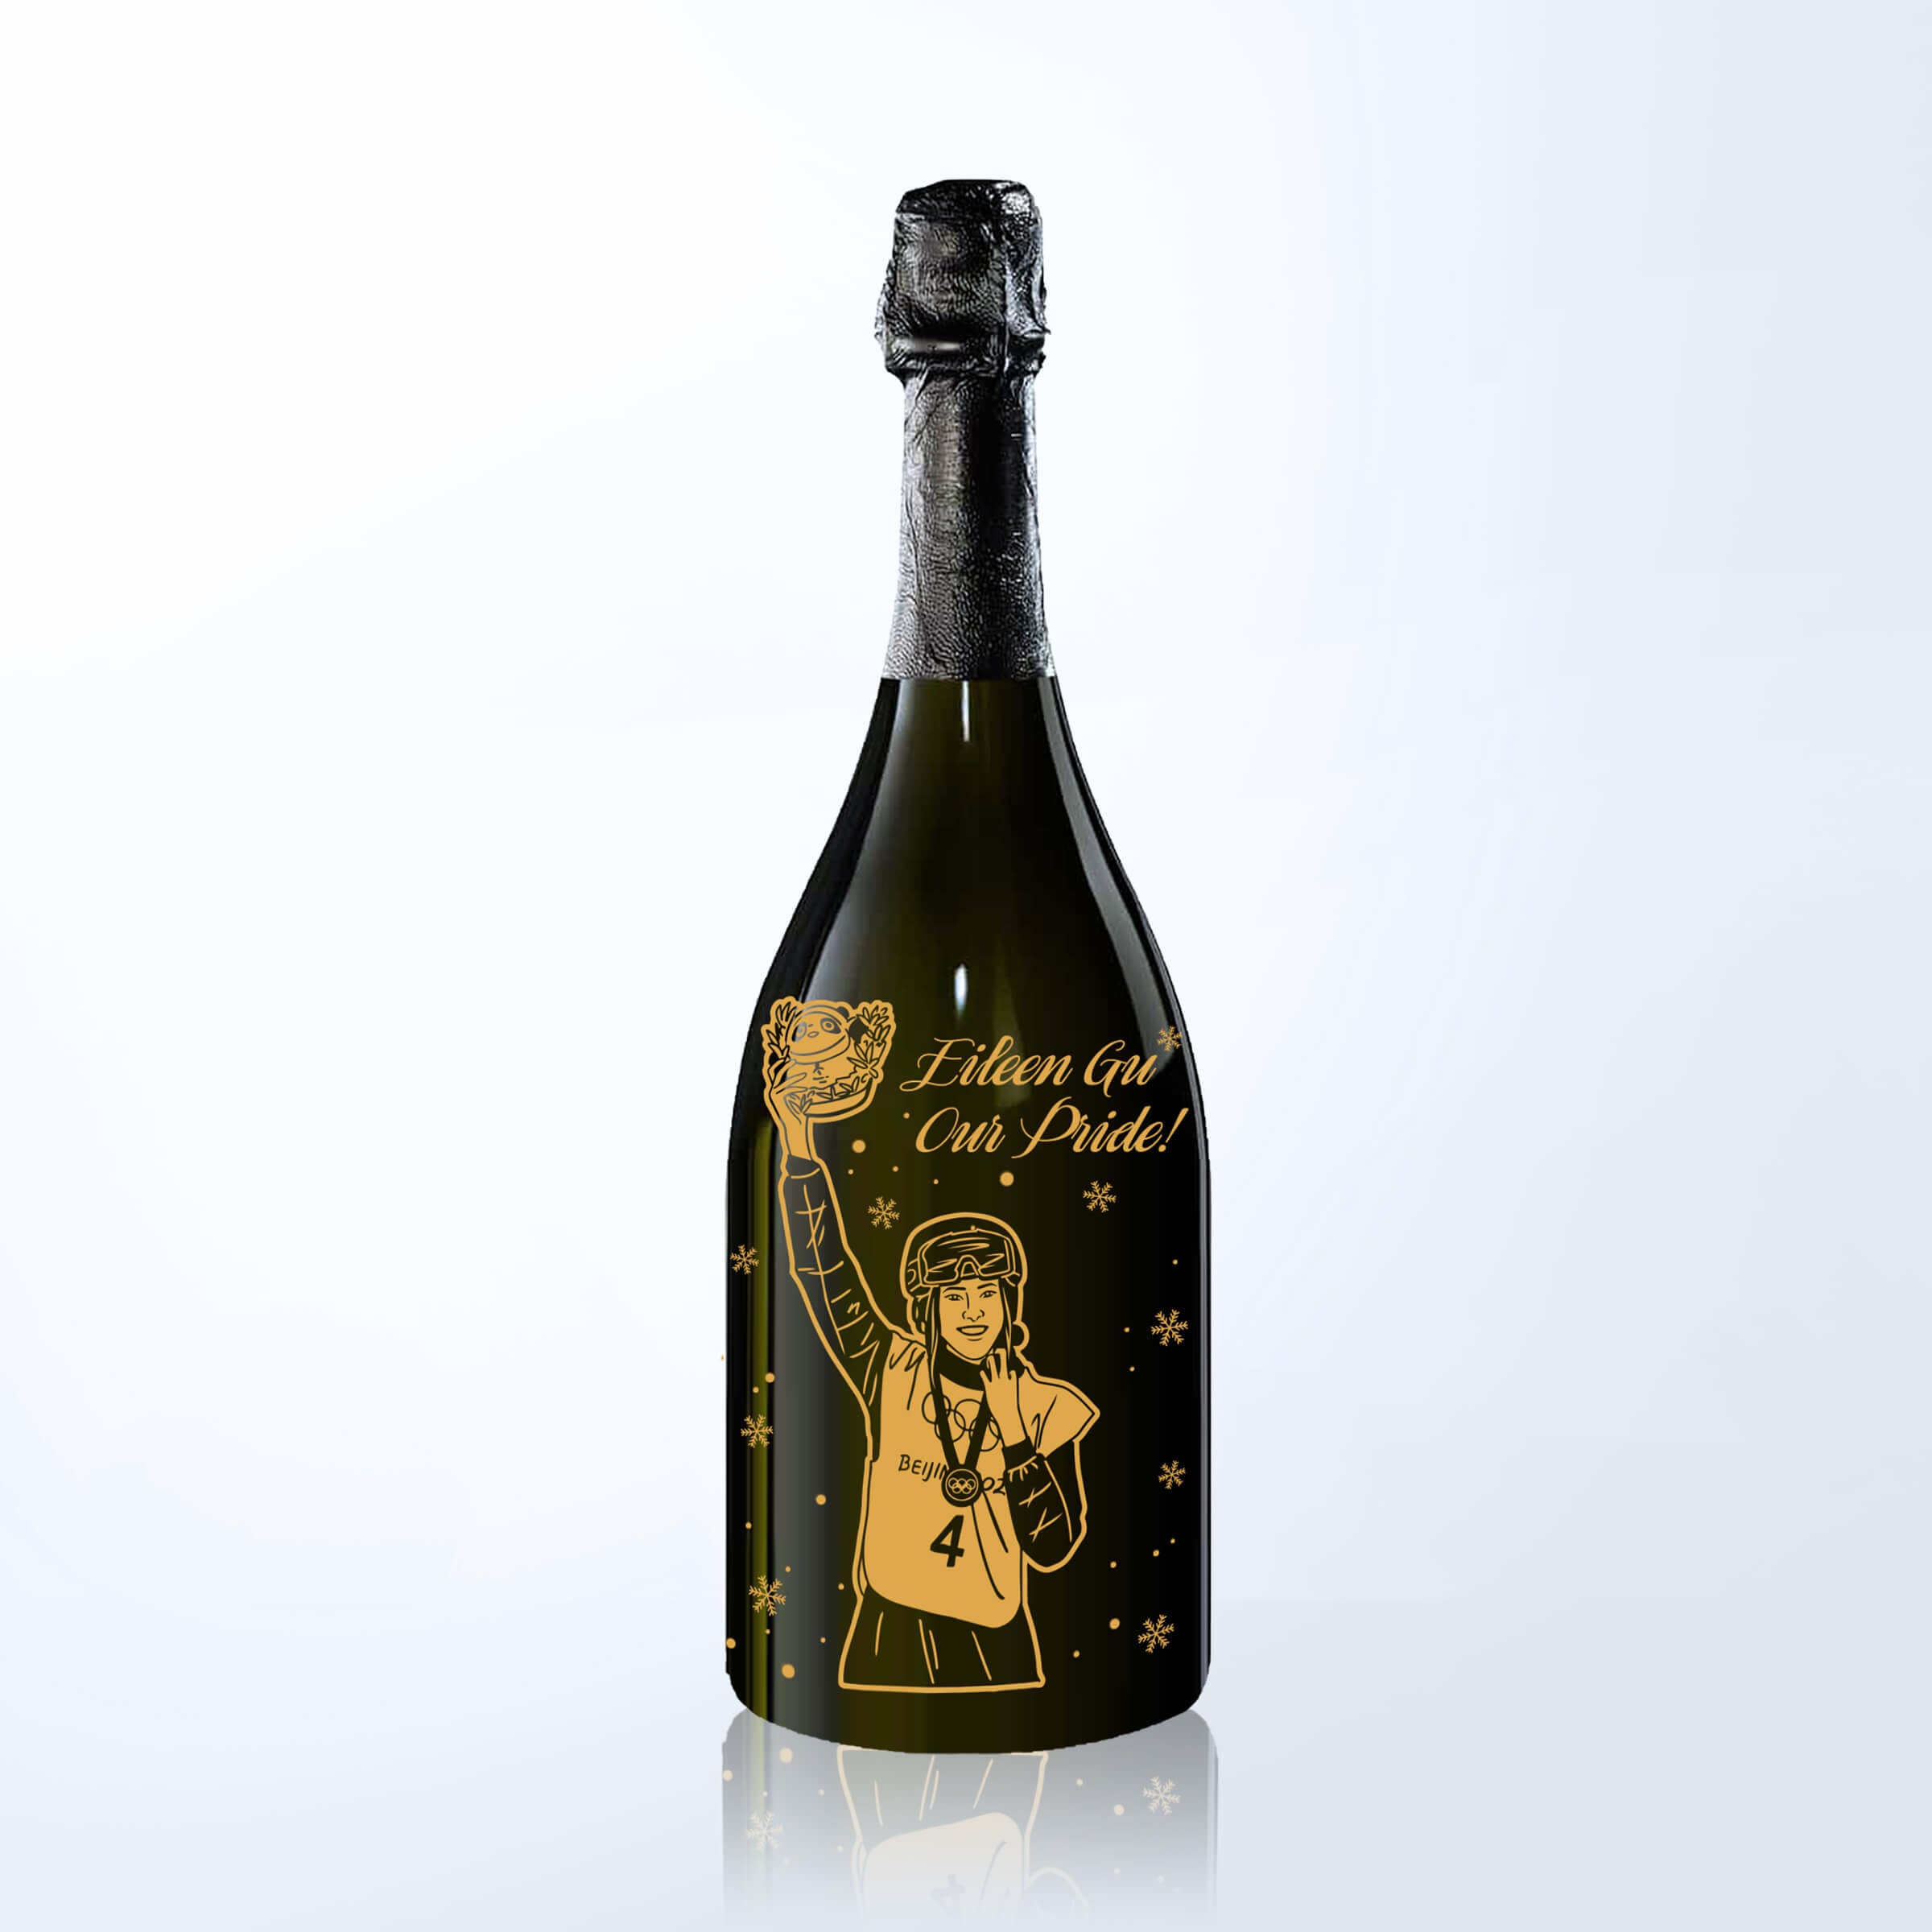 Dom Pérignon Vintage 2012 with Engraving |2012唐·培裏儂幹型香檳(含人像雕刻） - Design Your Own Wine